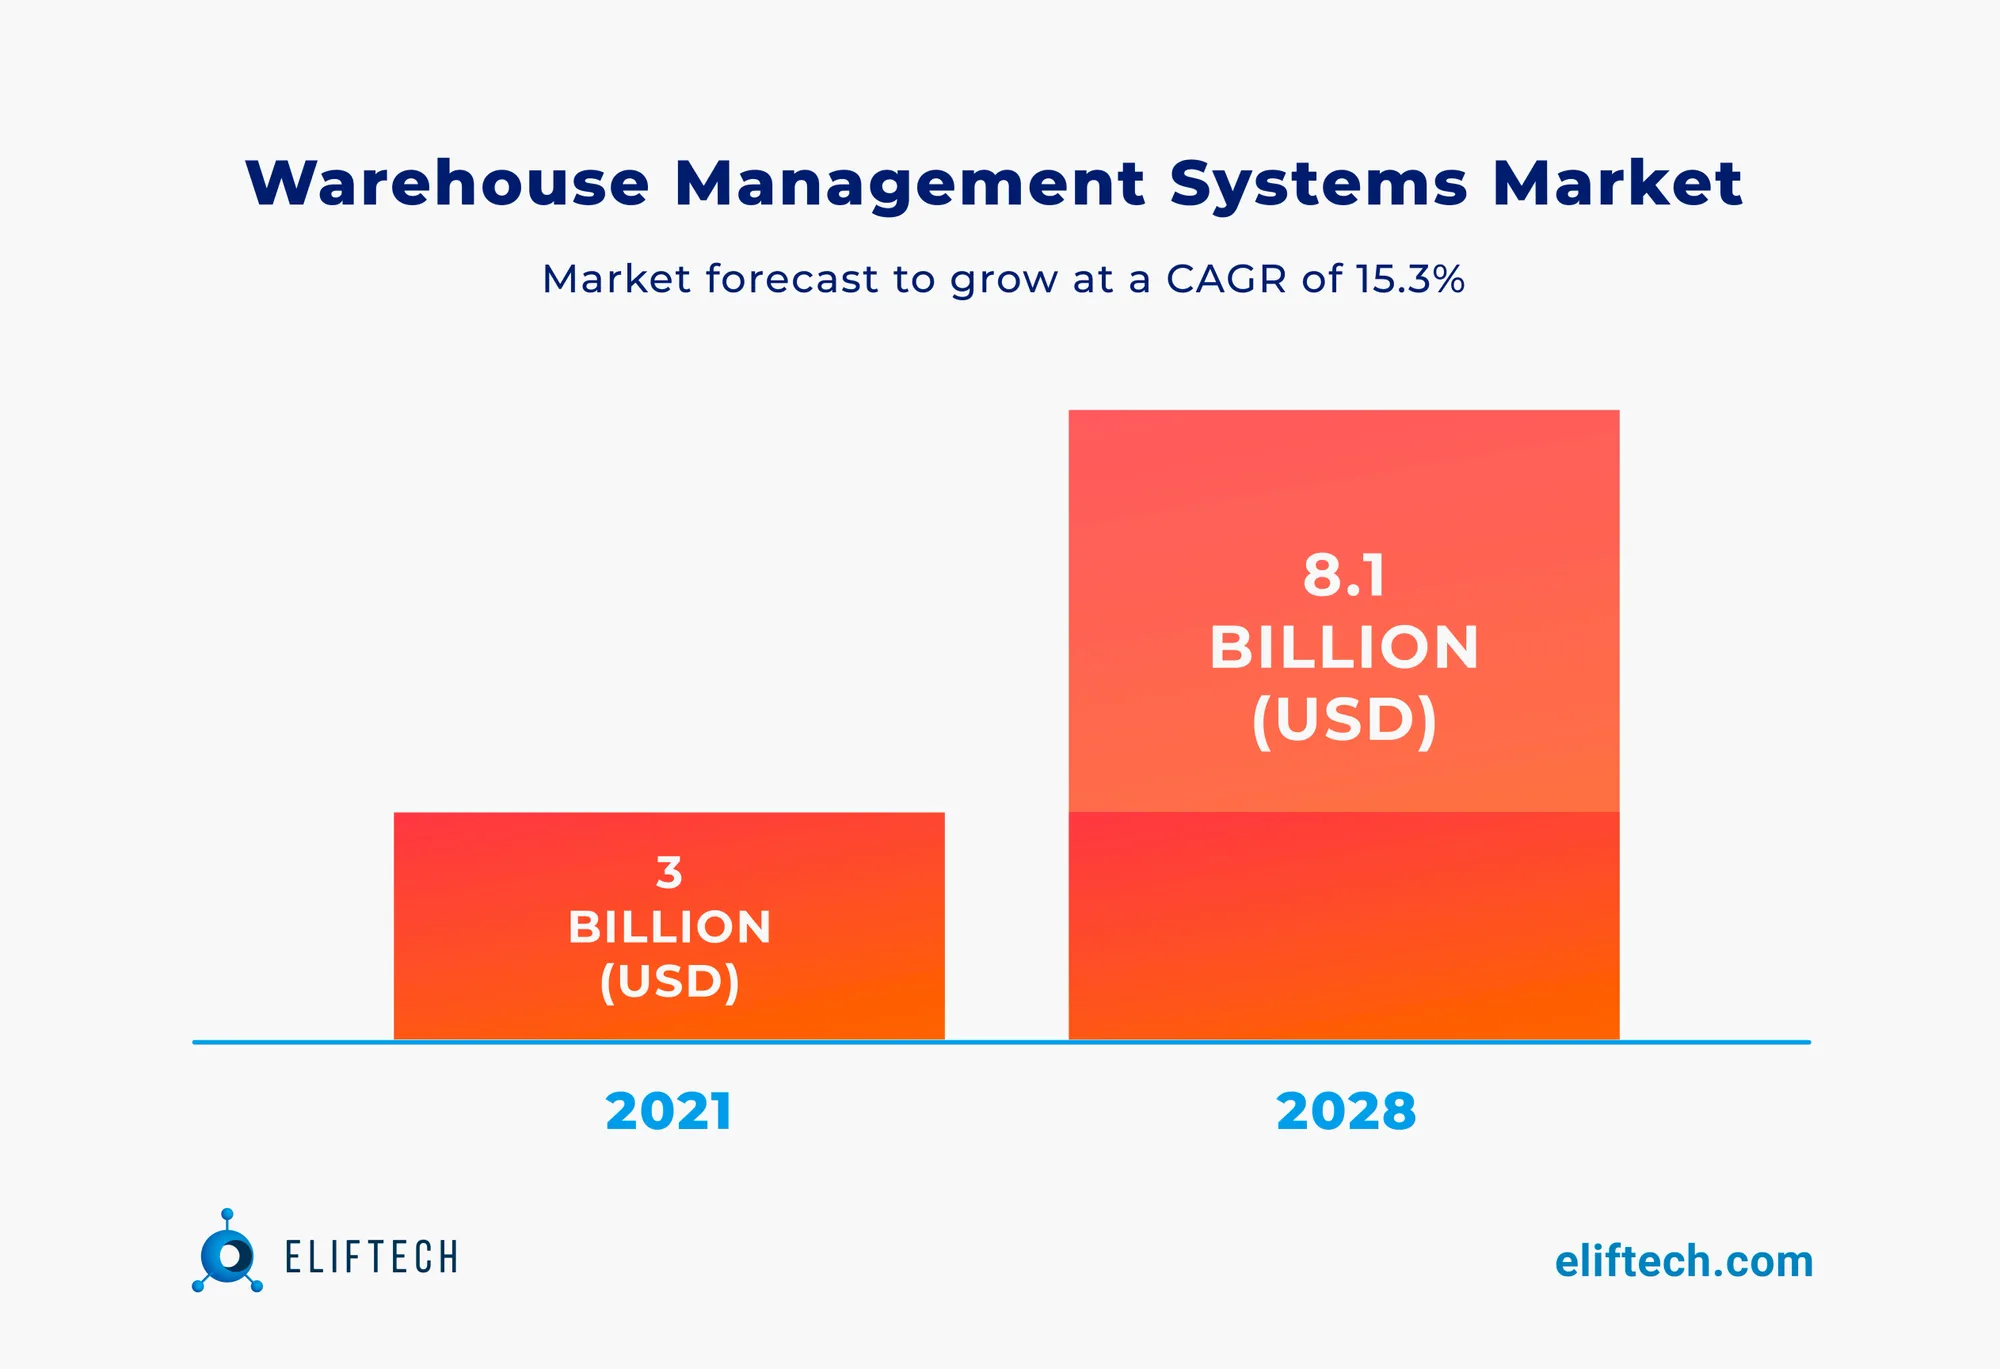 Warehouse management systems market 2021 vs 2028